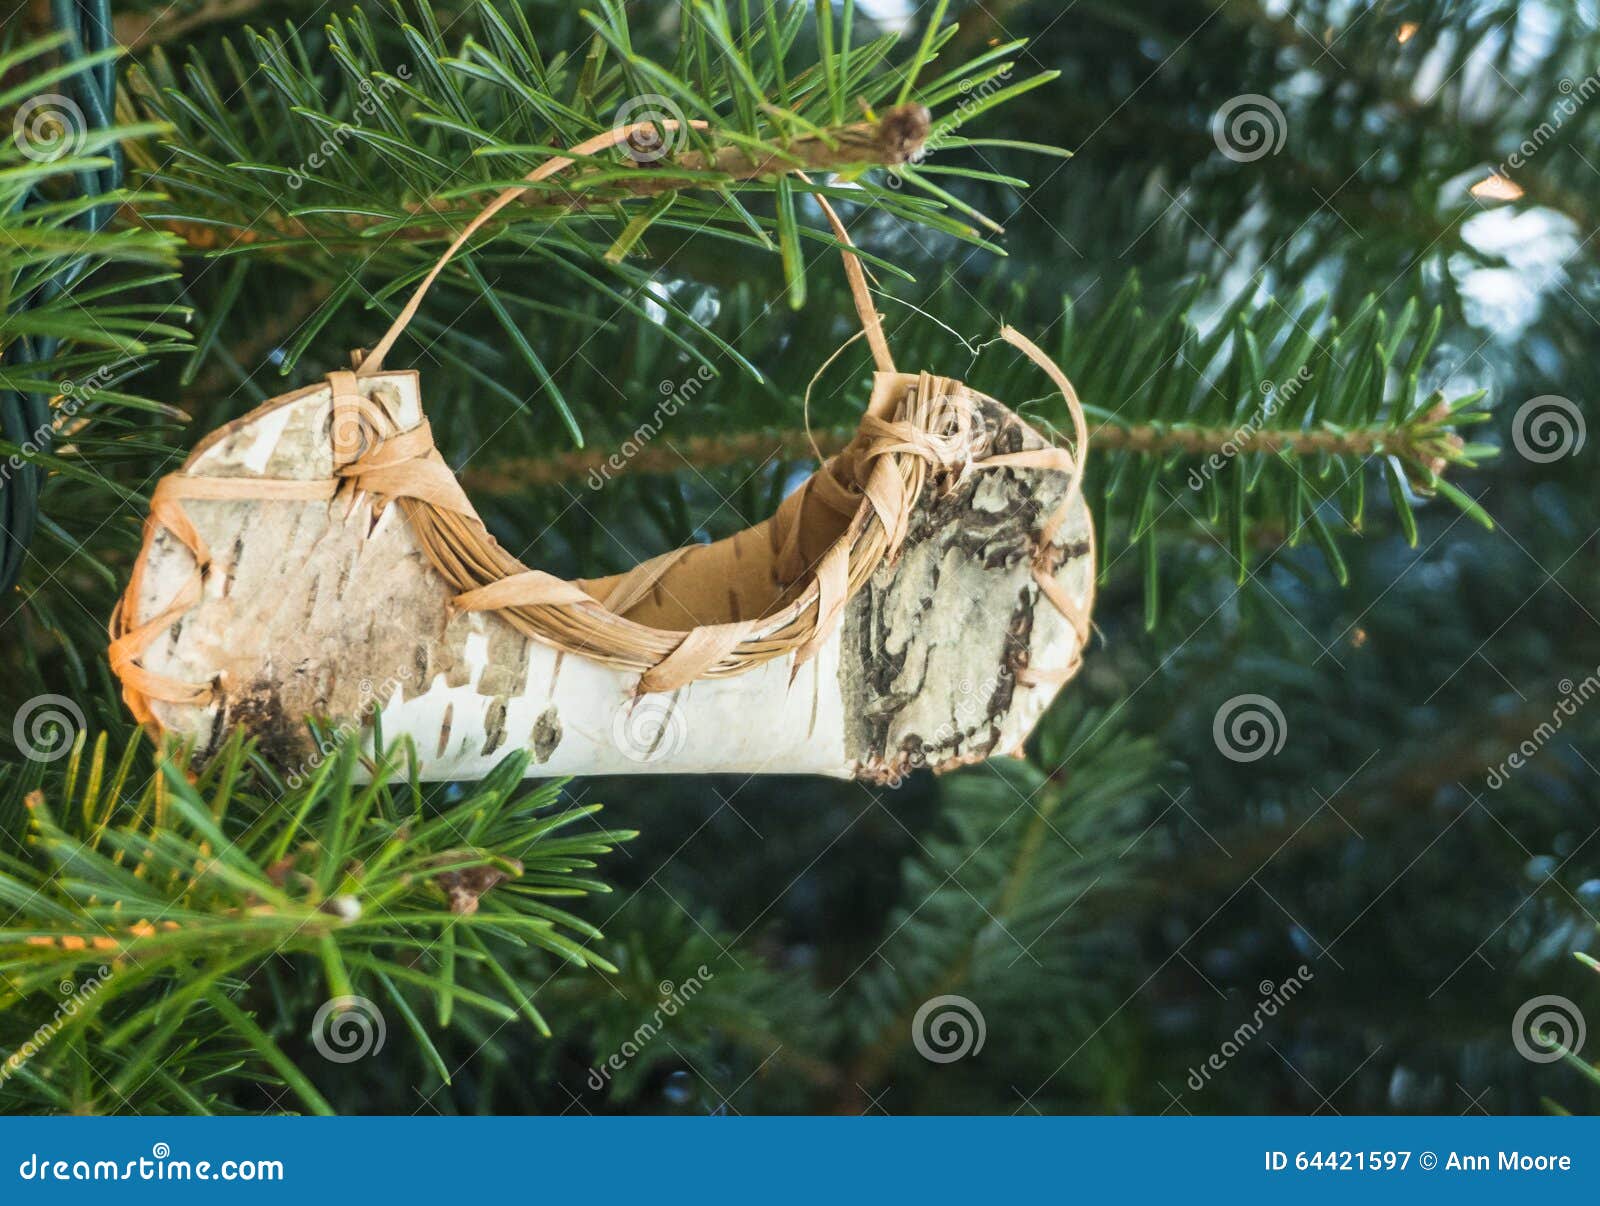 Birch bark canoe ornament hanging on a Christmas holiday tree.